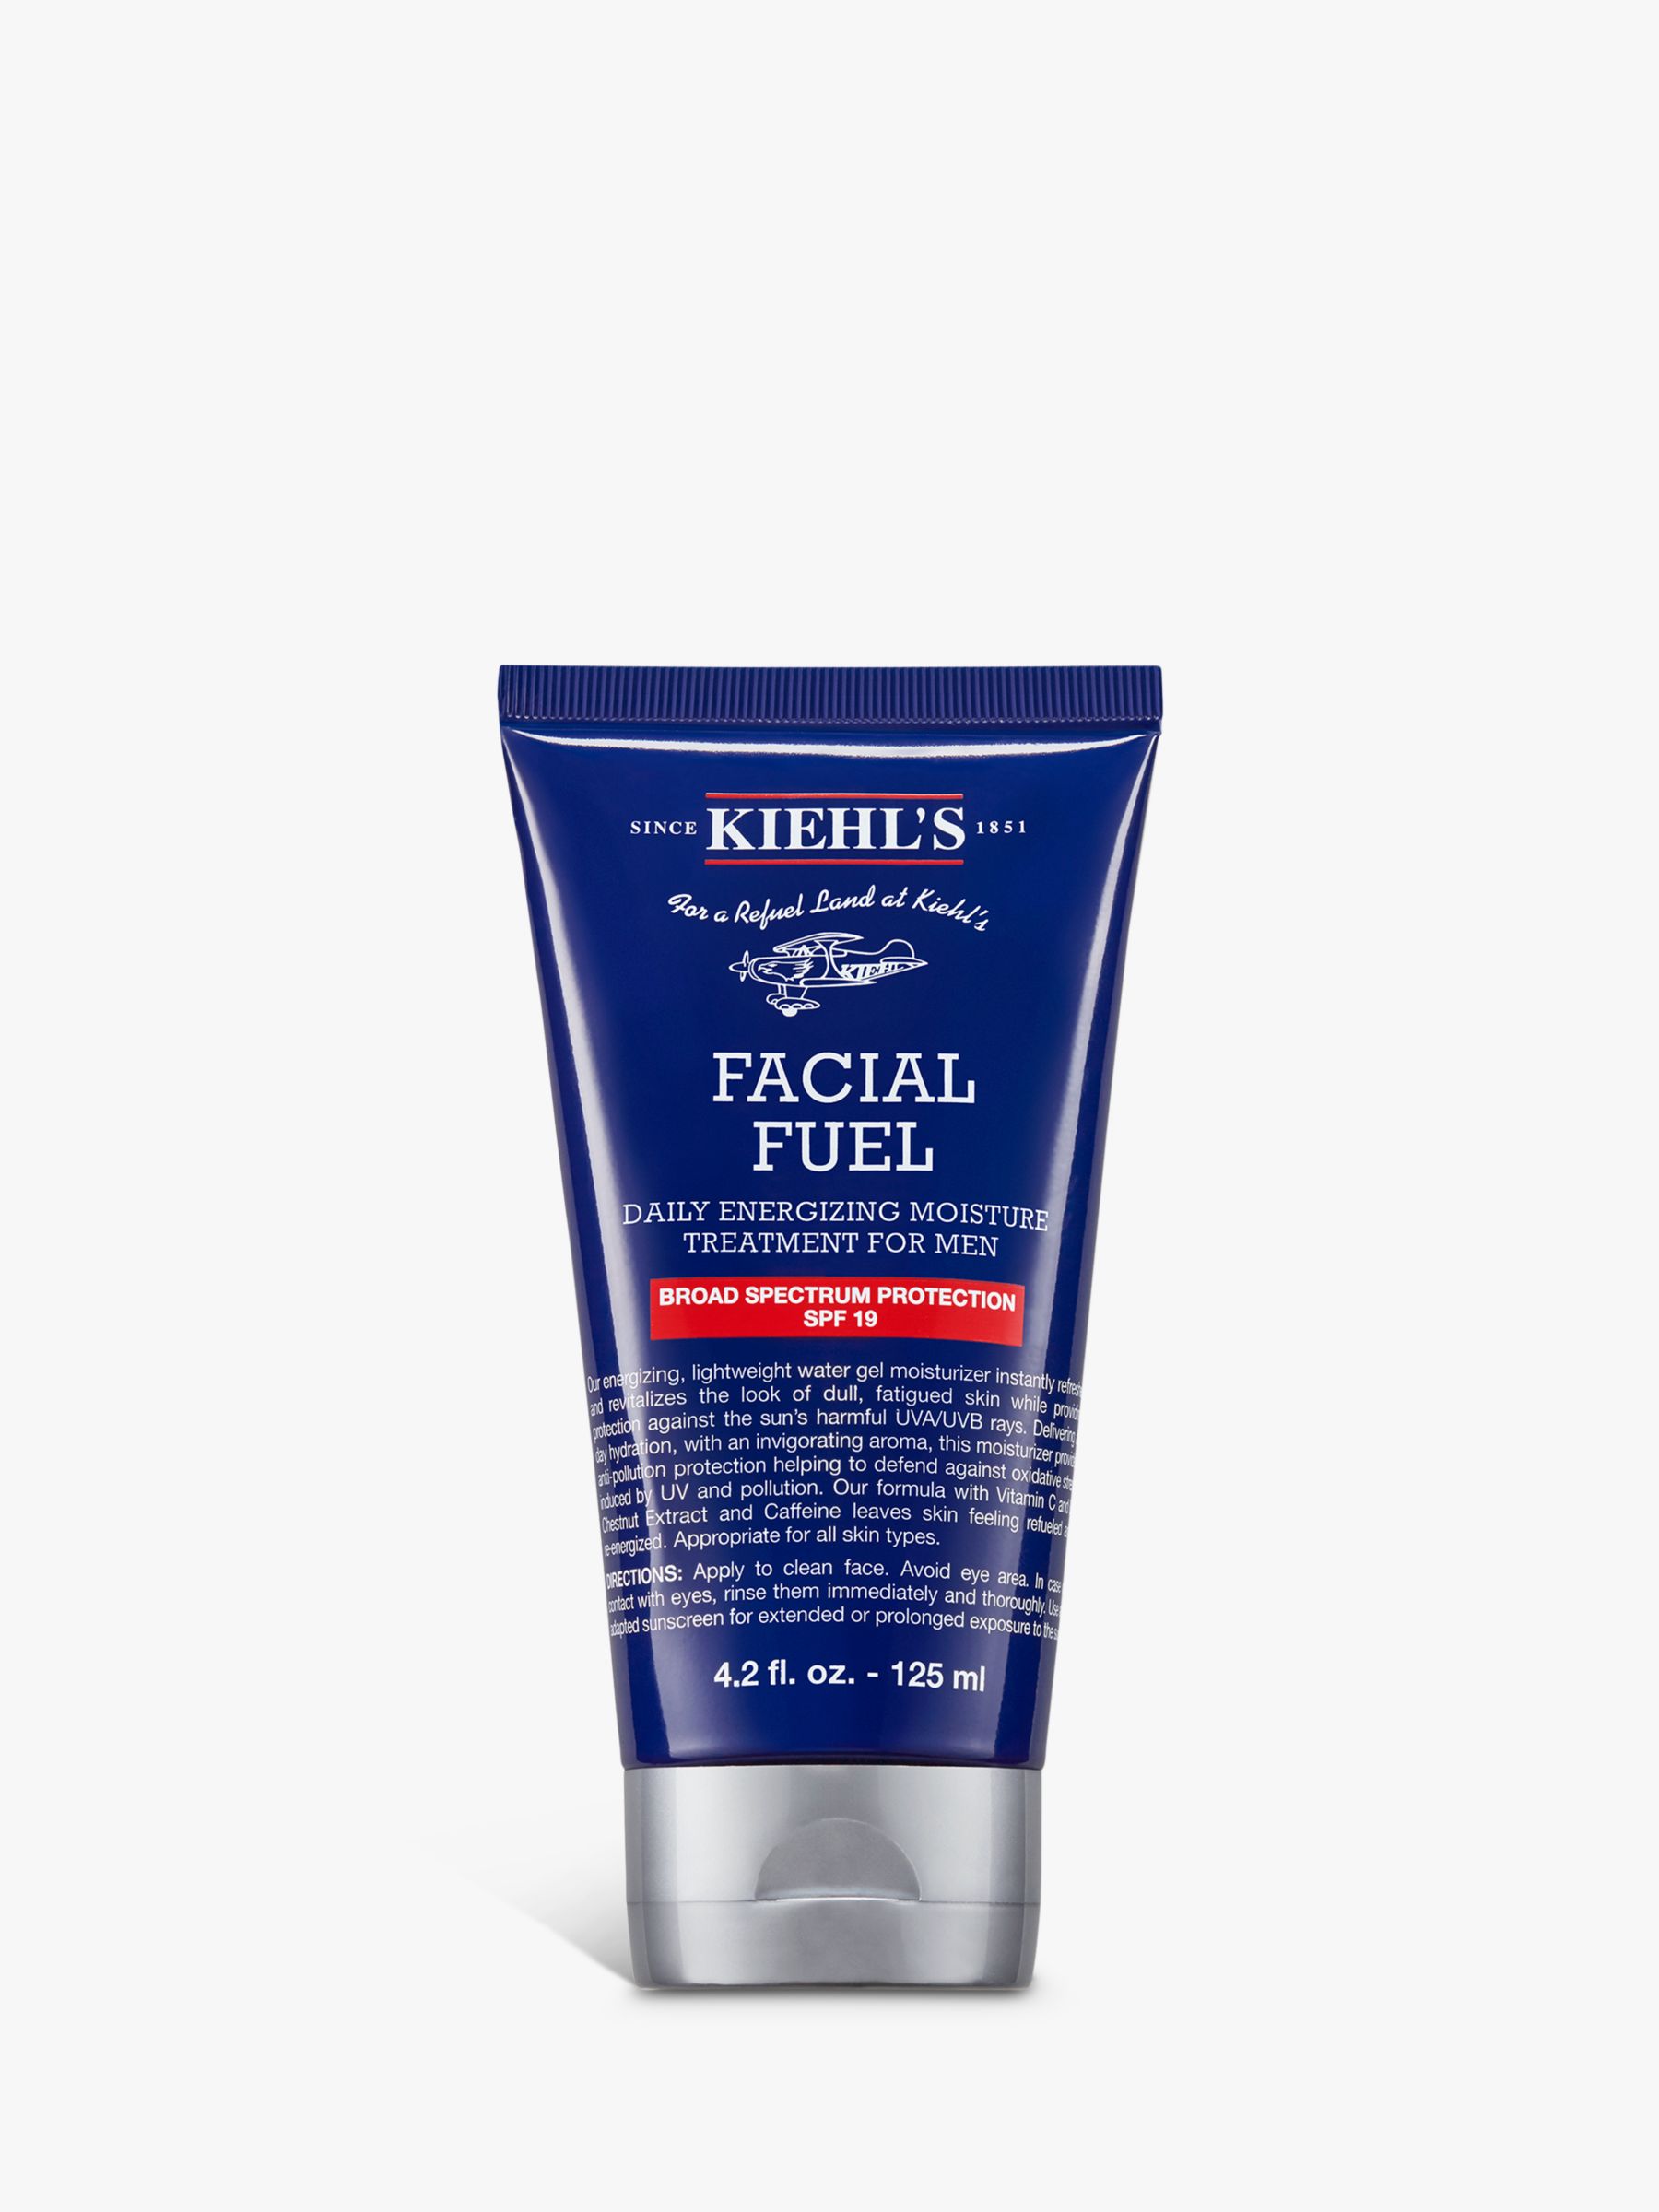 Kiehl's Facial Fuel Energizing Moisture Treatment for Men SPF 19, 125ml